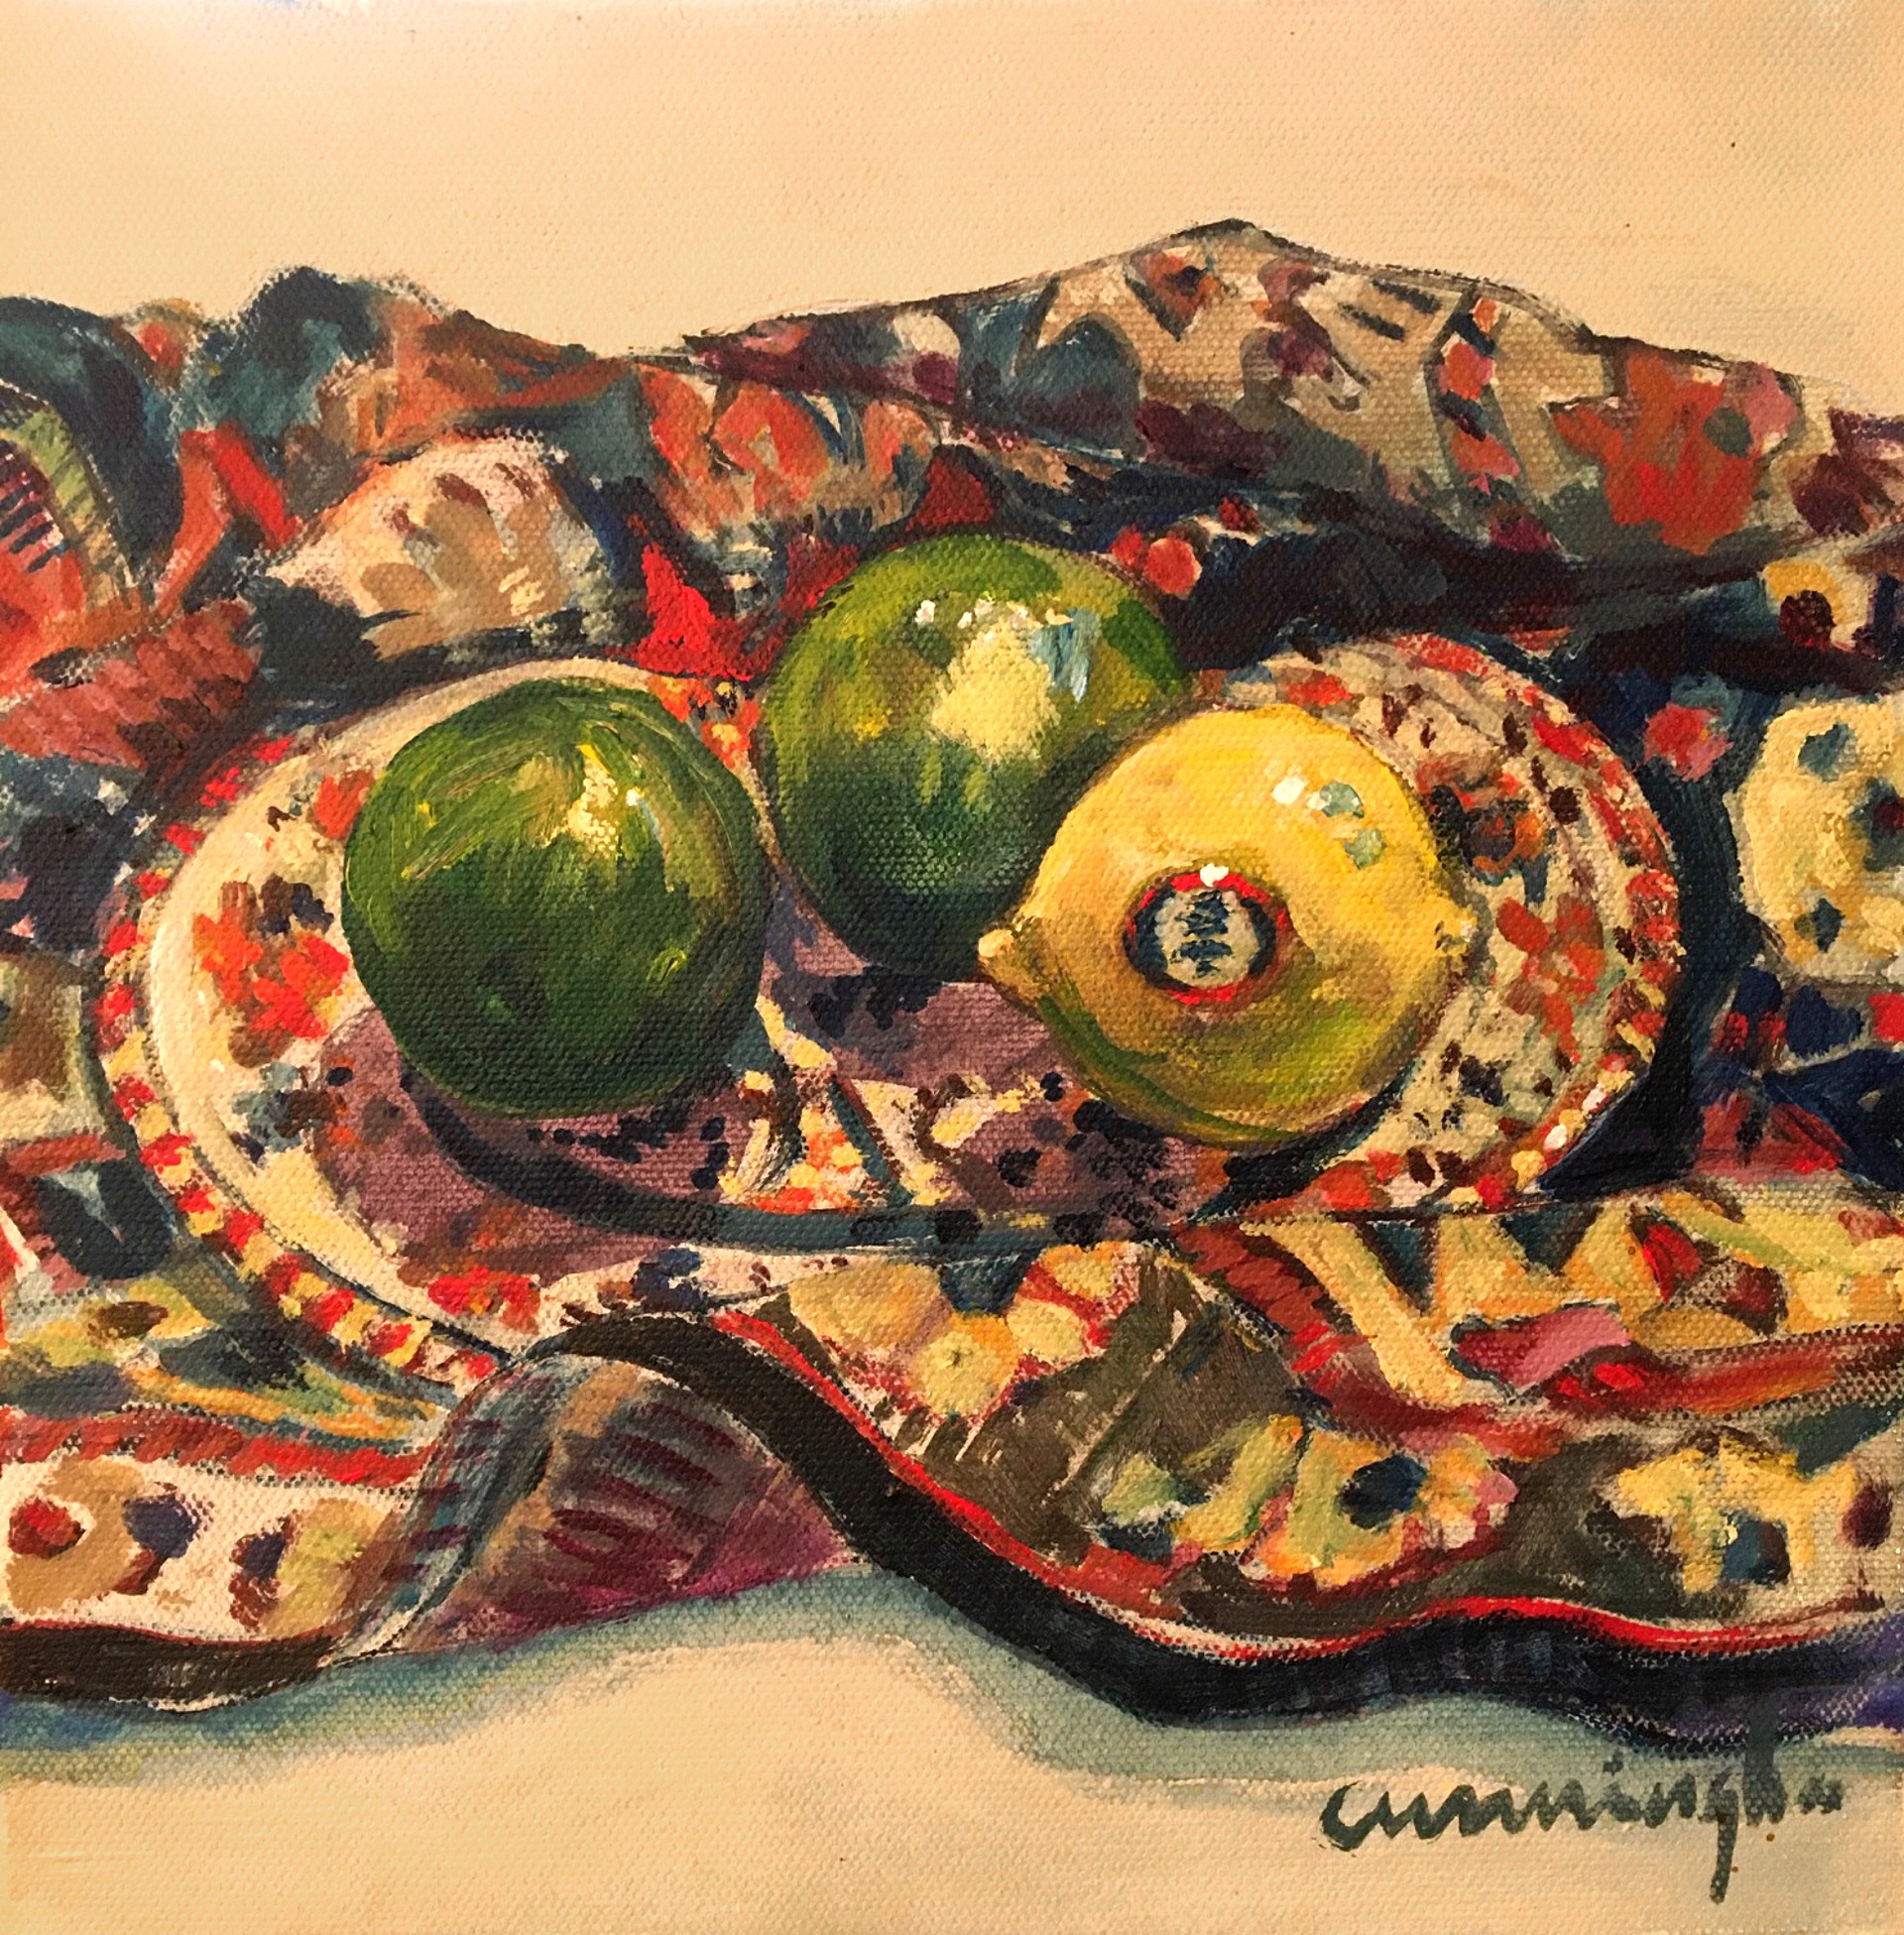 Lemon and Limes by Nan Cunningham